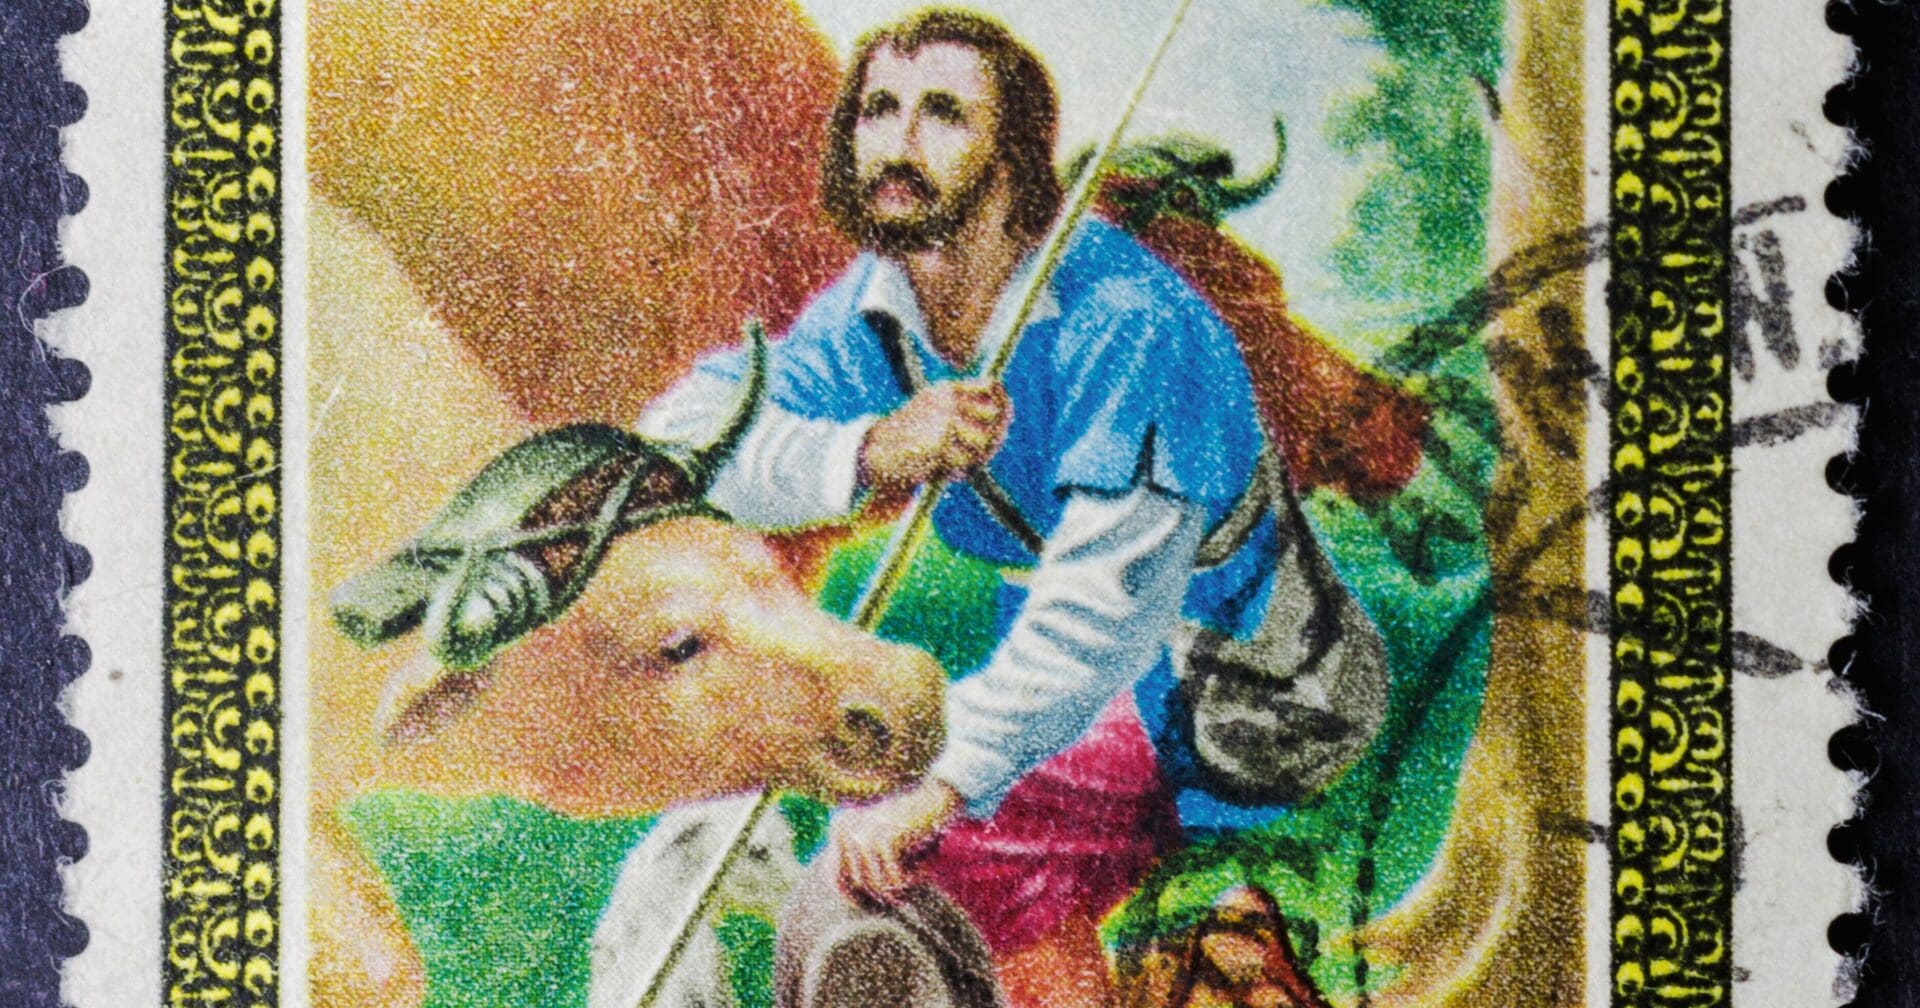 Saint Isidore the Farmer